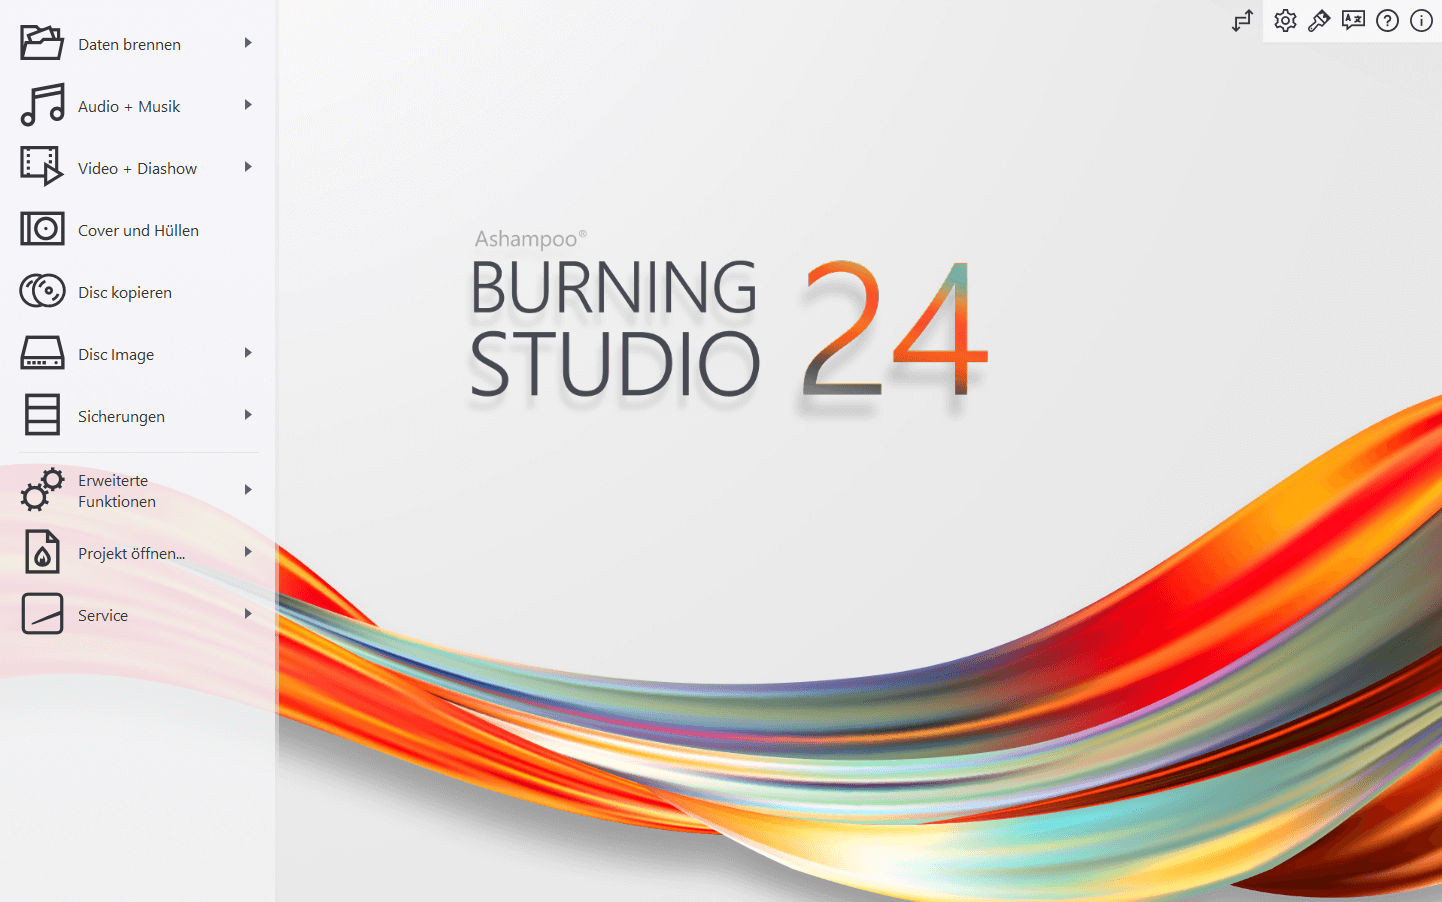 Ashampoo® Burning Studio 24 - Start hell